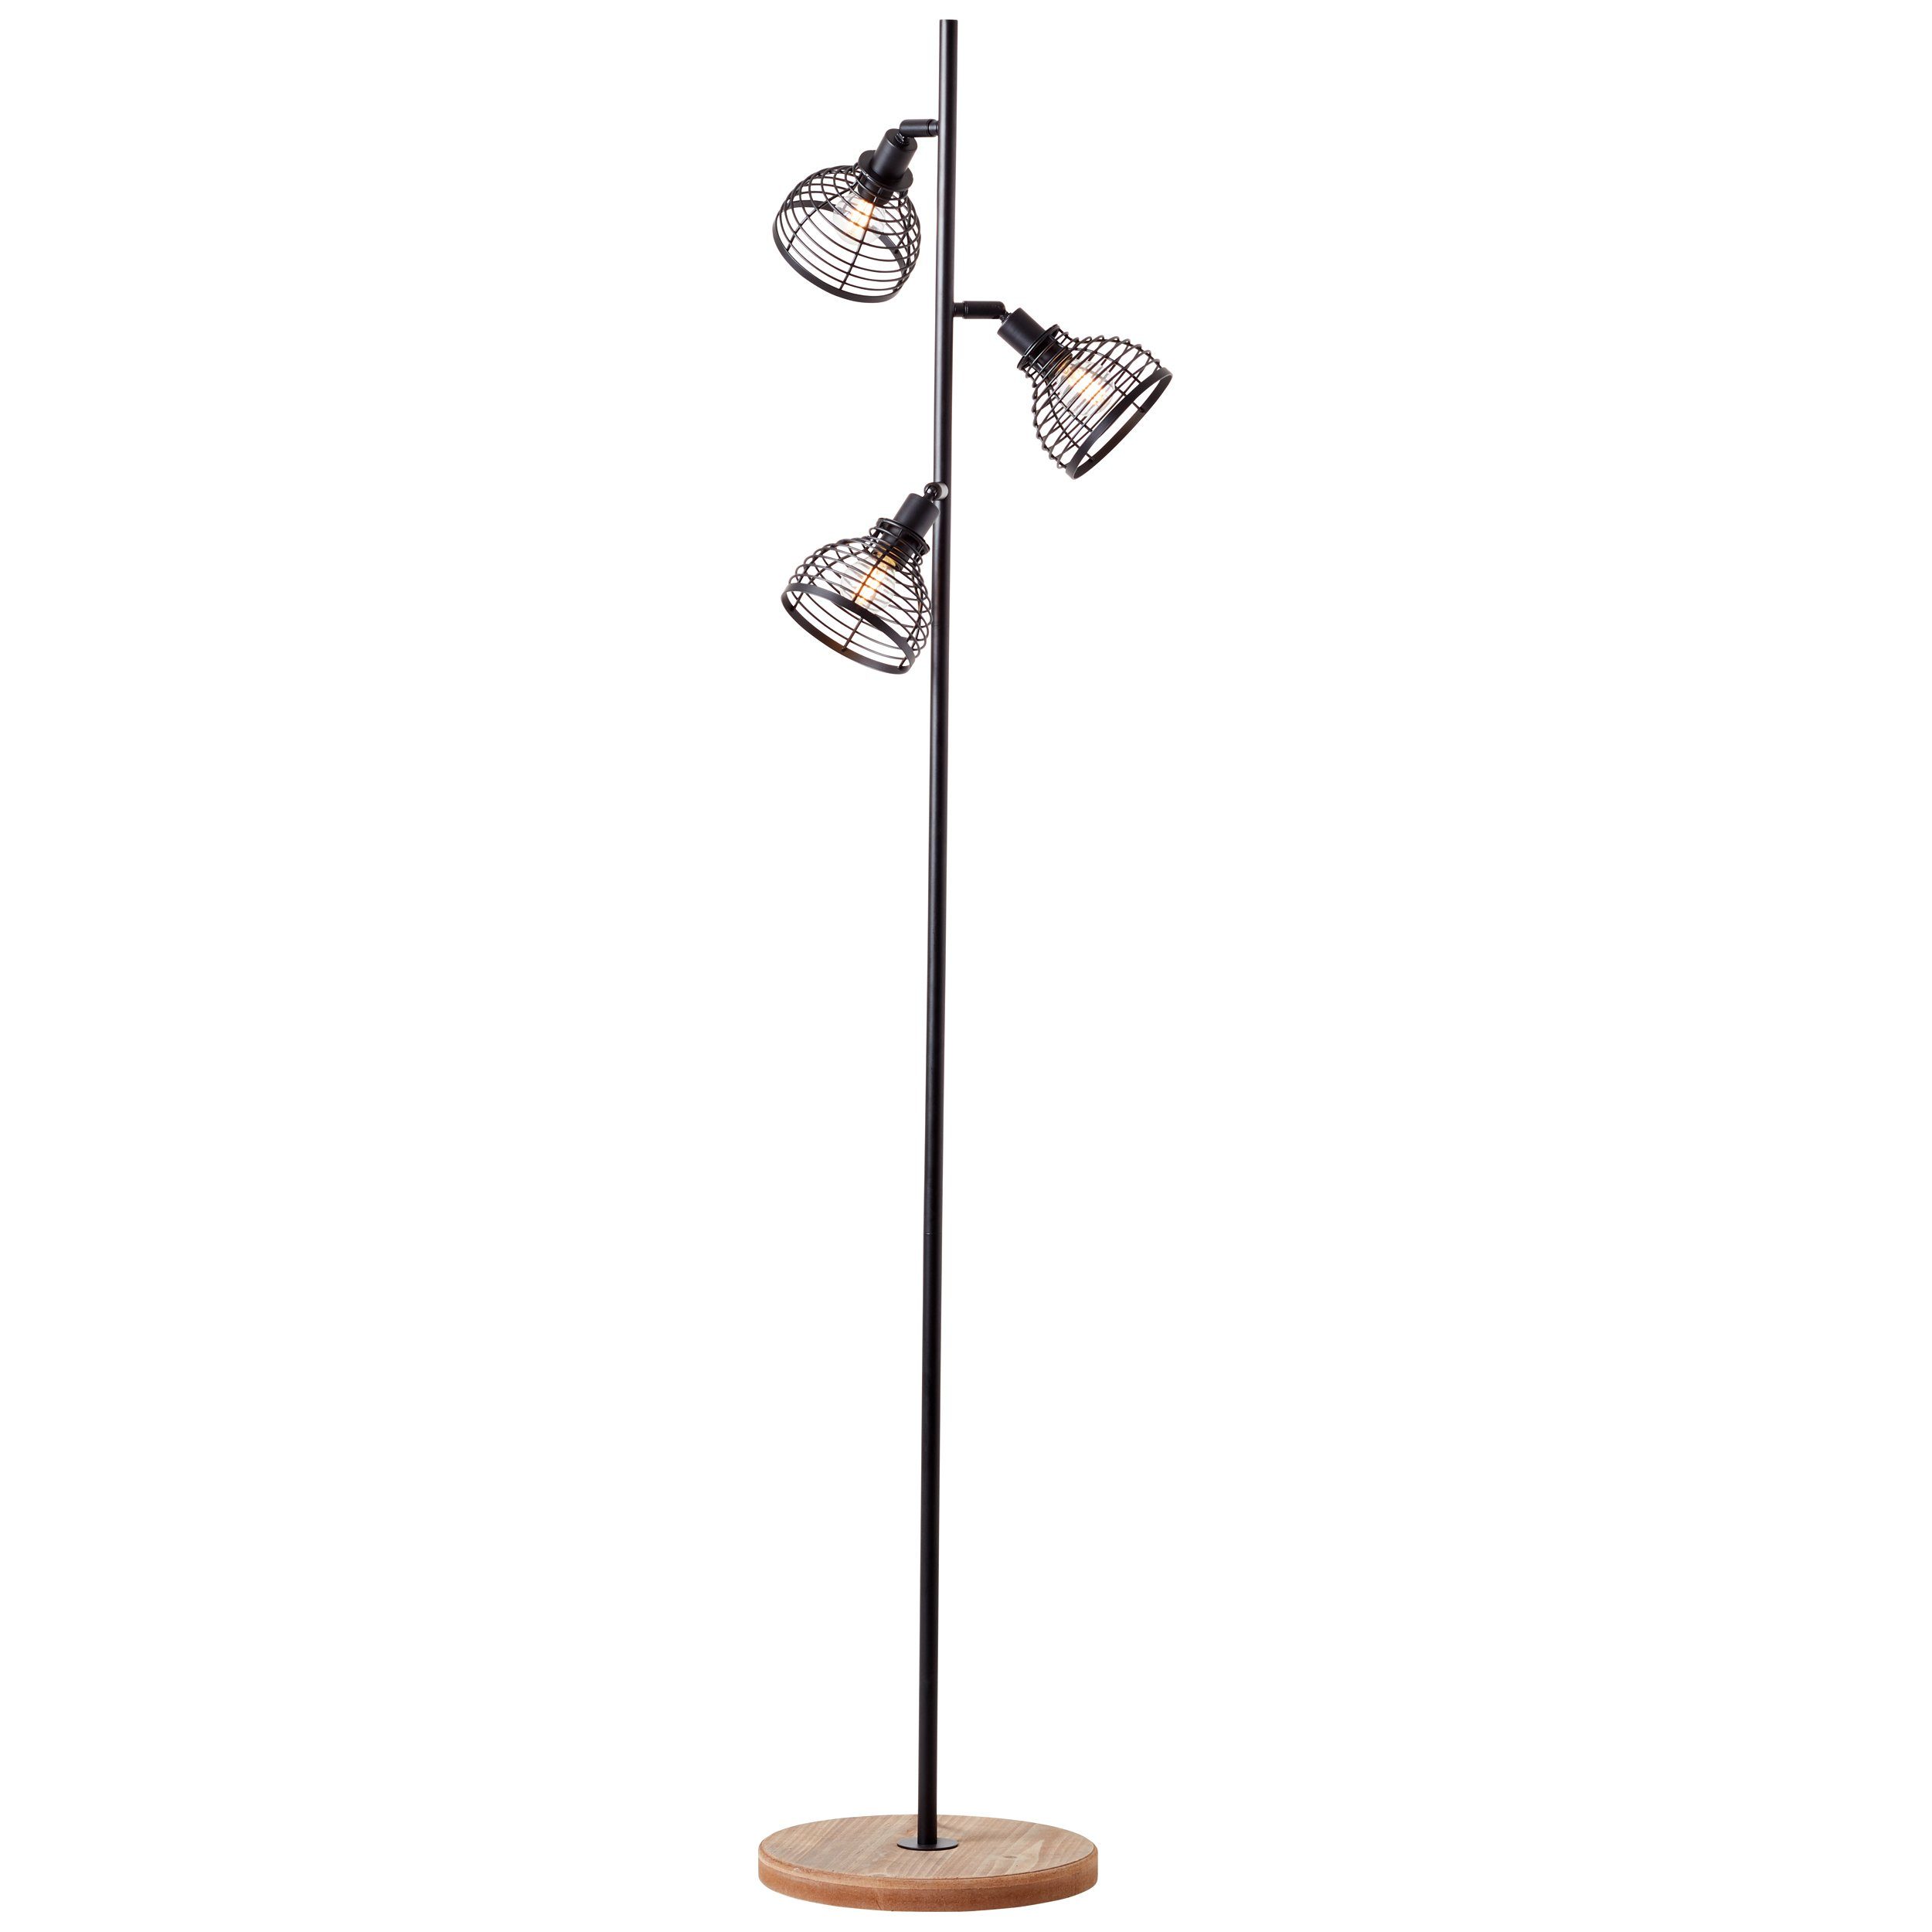 Brilliant Stehlampe Avia, Avia Standleuchte 3flg schwarz/holz, Metall/Holz, 3x D45, 42 W | Standleuchten